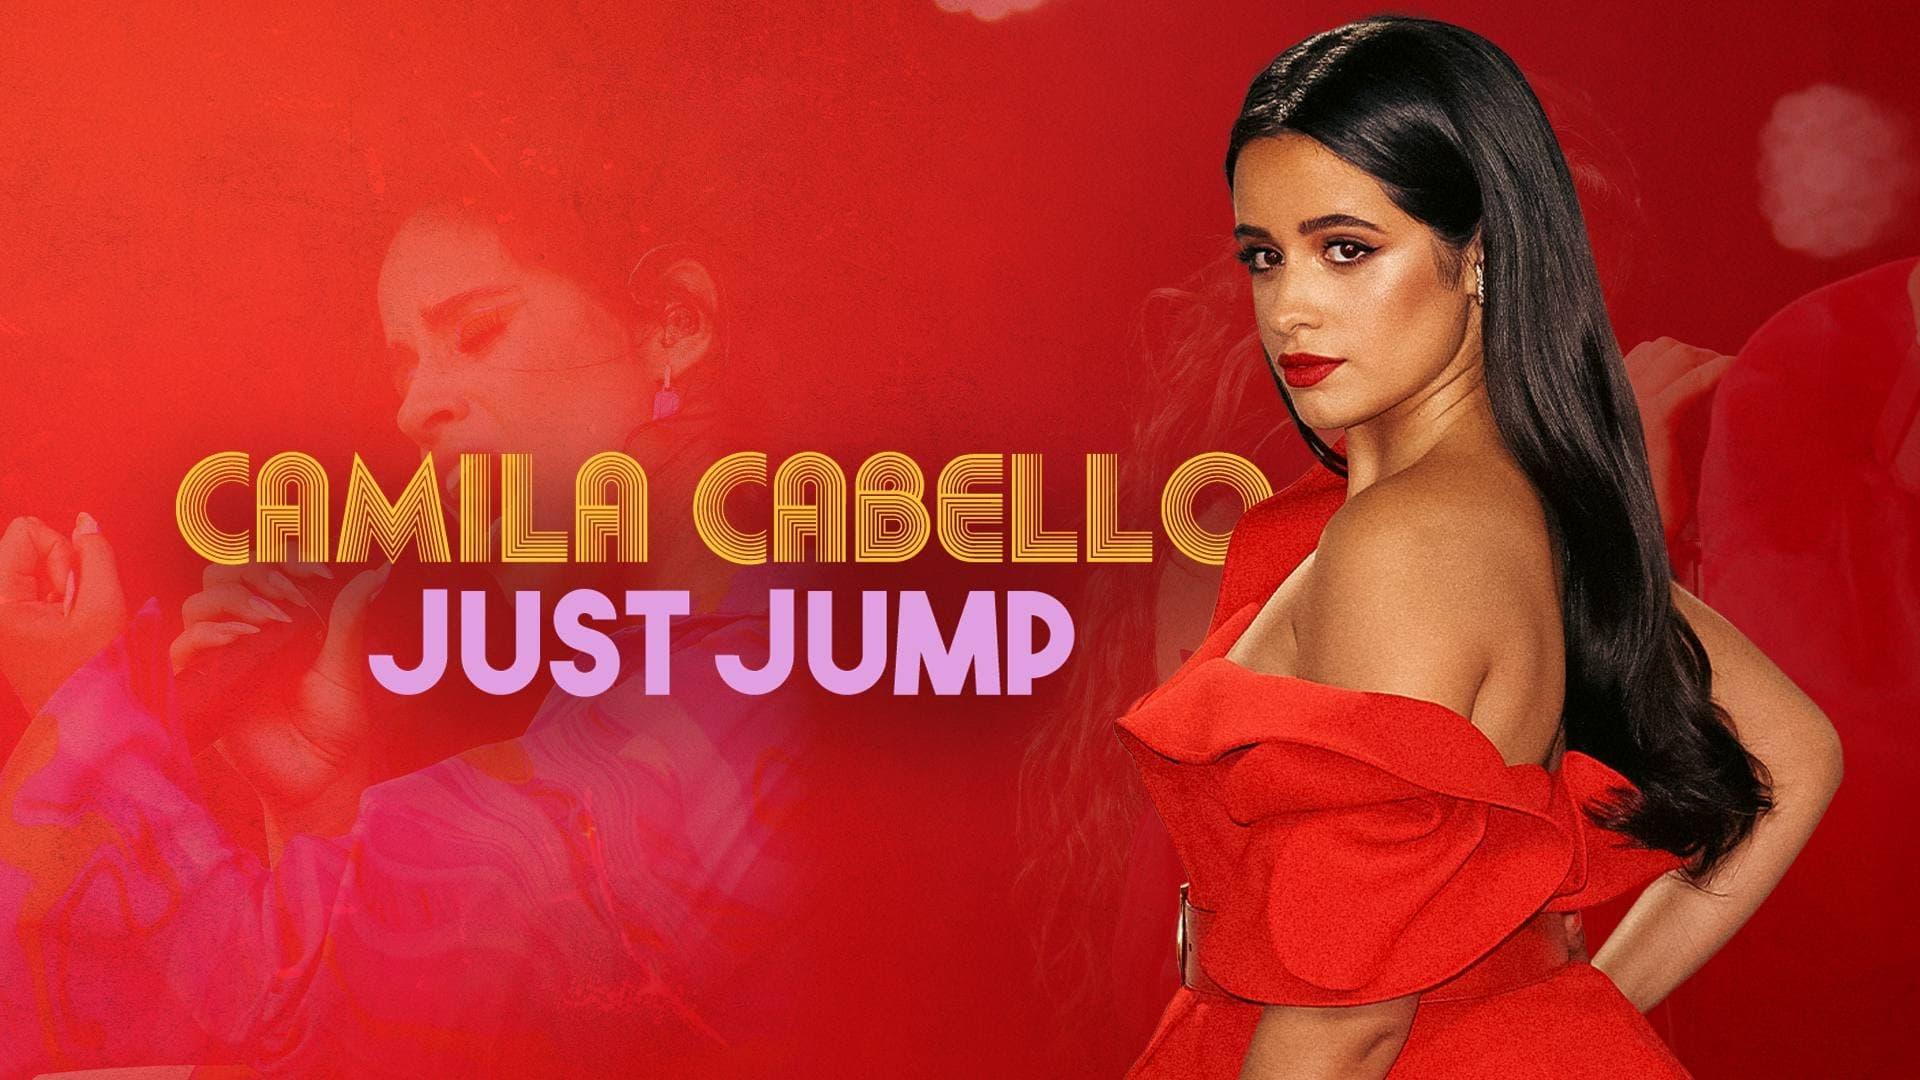 Camila Cabello: Just Jump backdrop